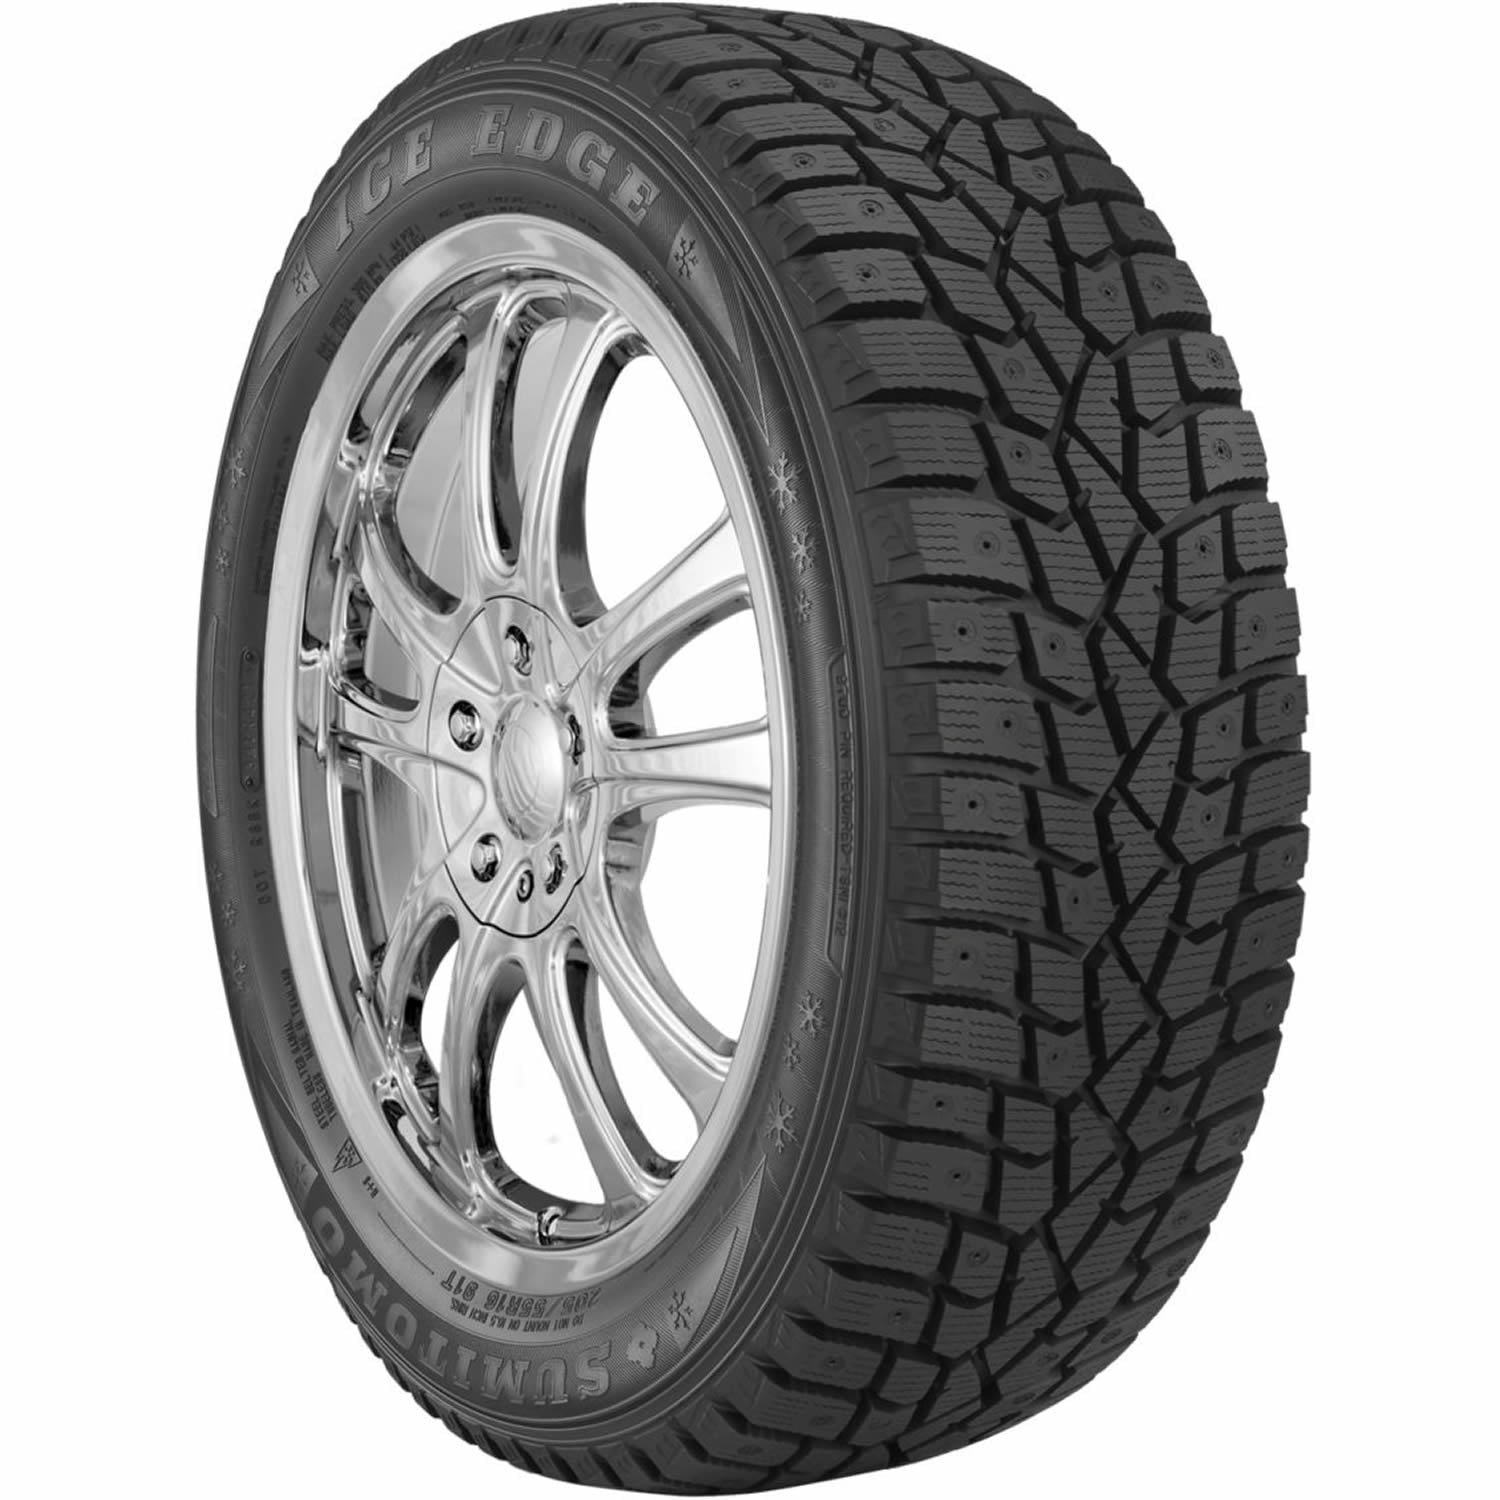 SUMITOMO ICE EDGE 235/60R17 (28.3X9.4R 17) Tires